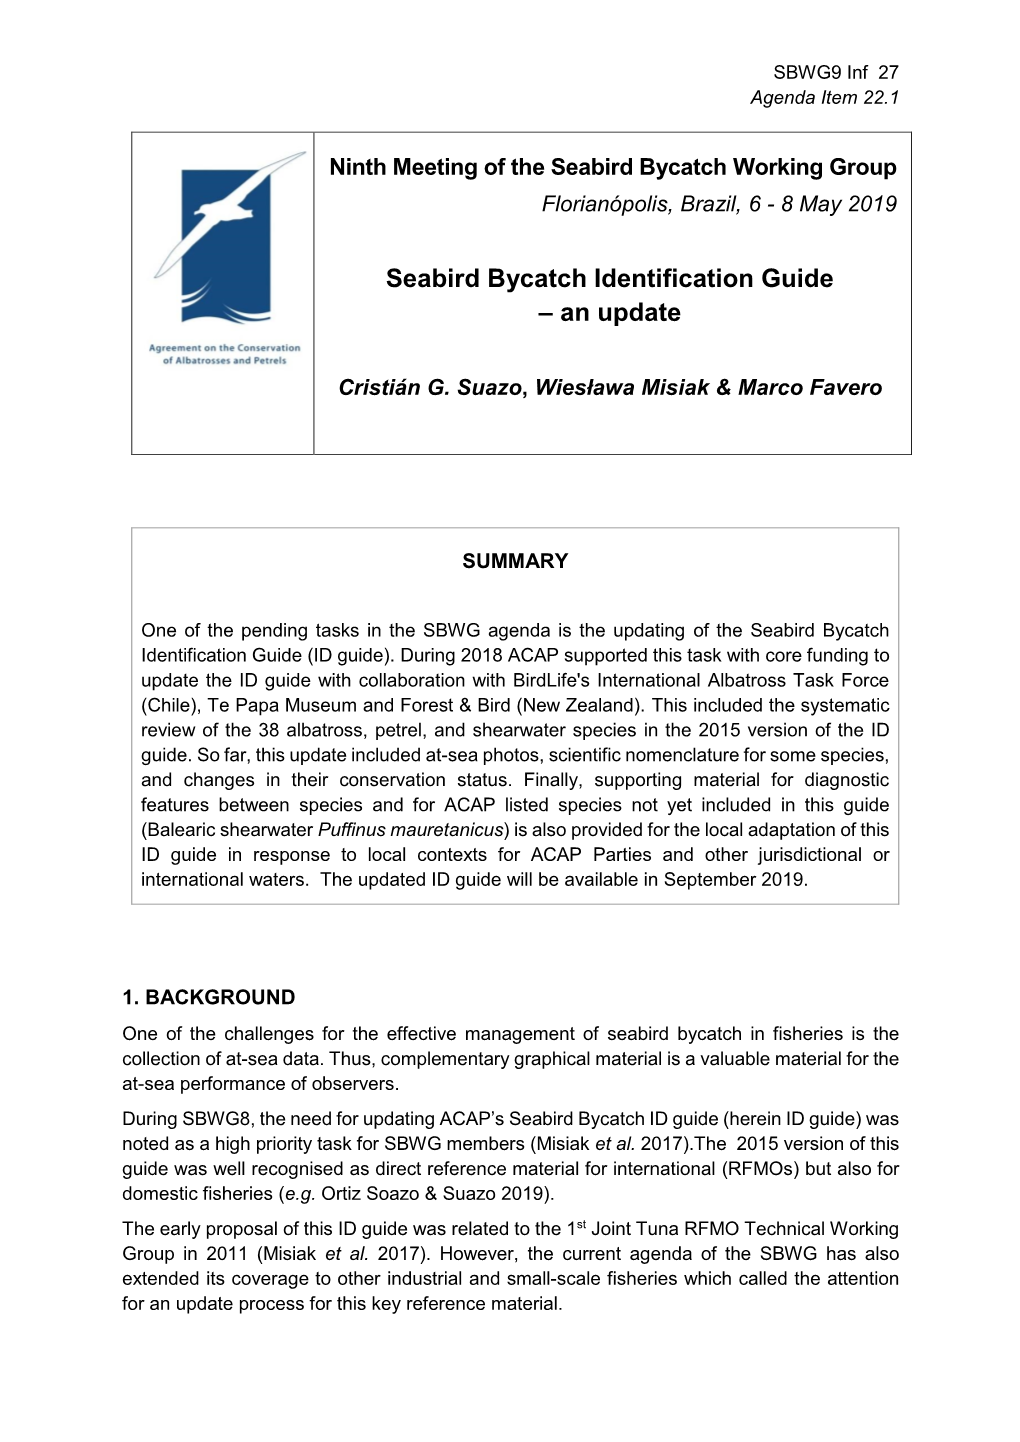 Seabird Bycatch Identification Guide – an Update